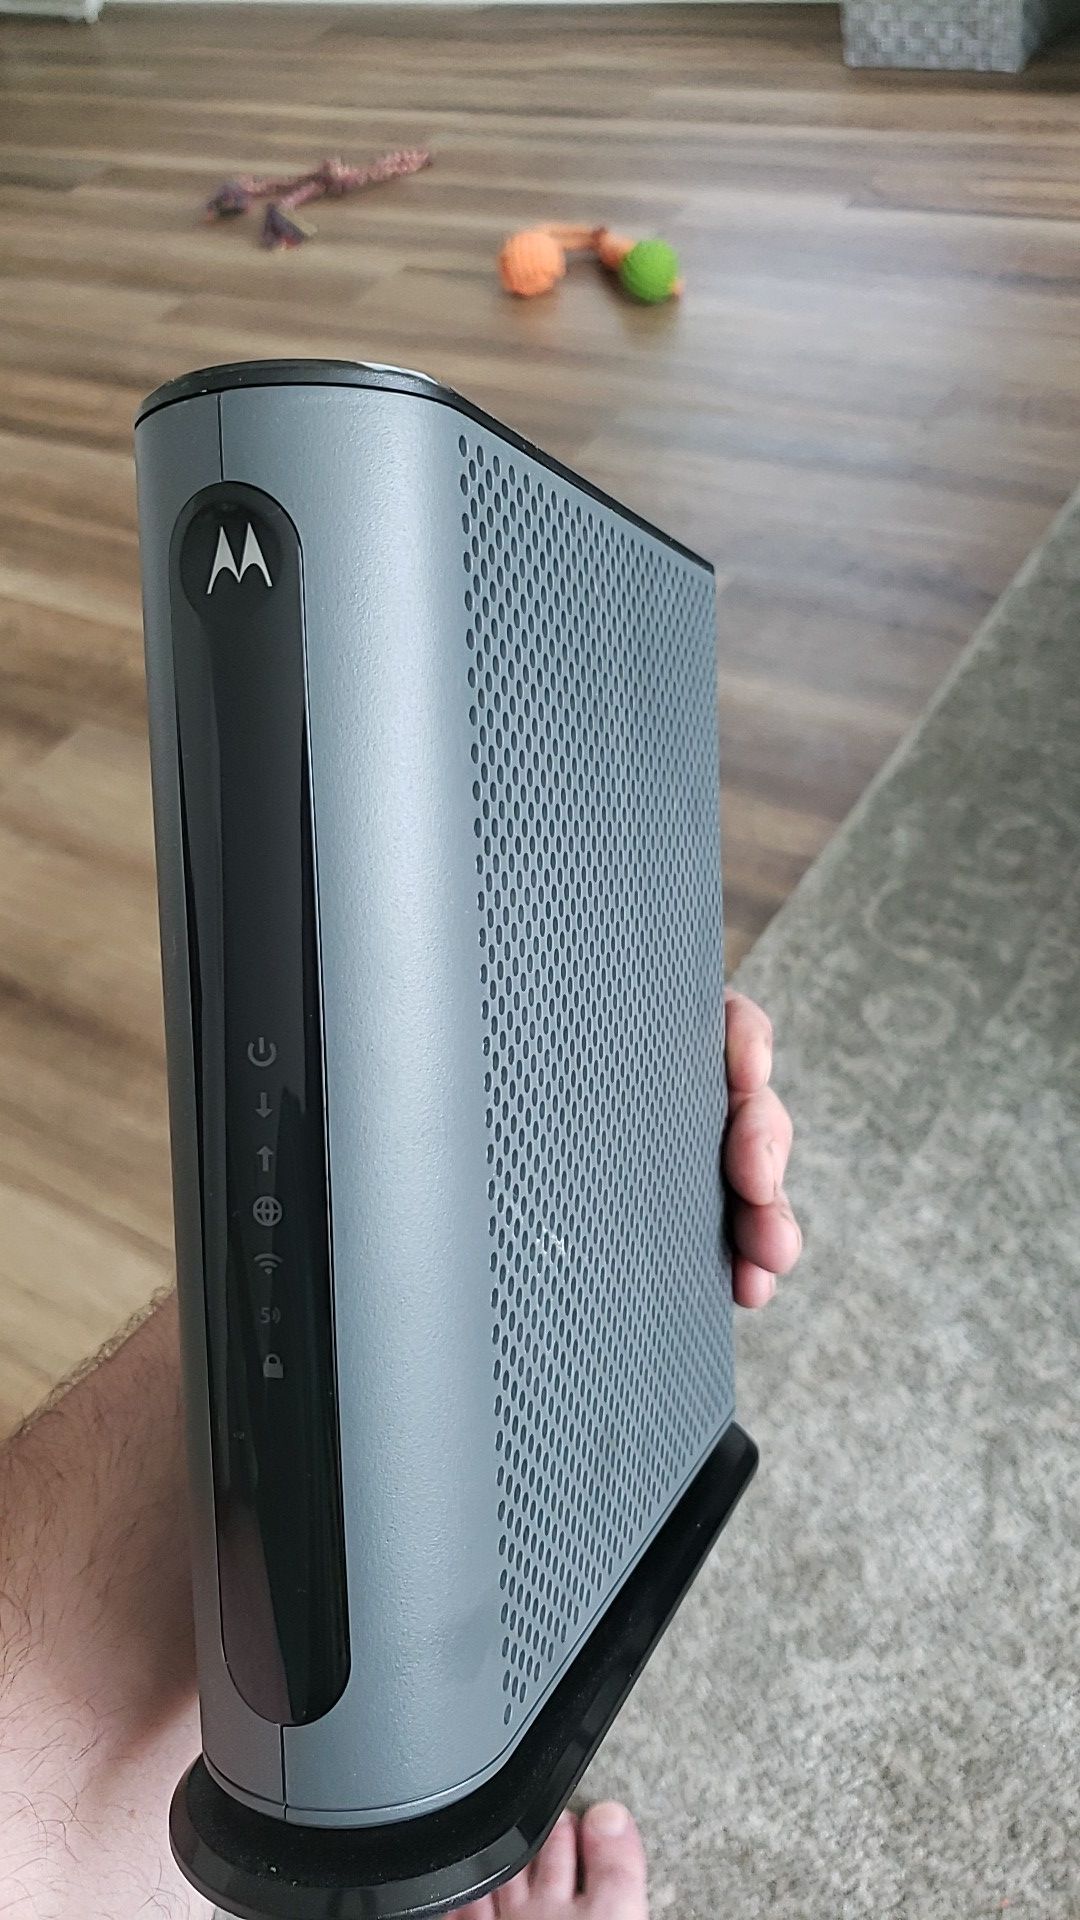 Motorola 3.0 Cable Modem Plus Router